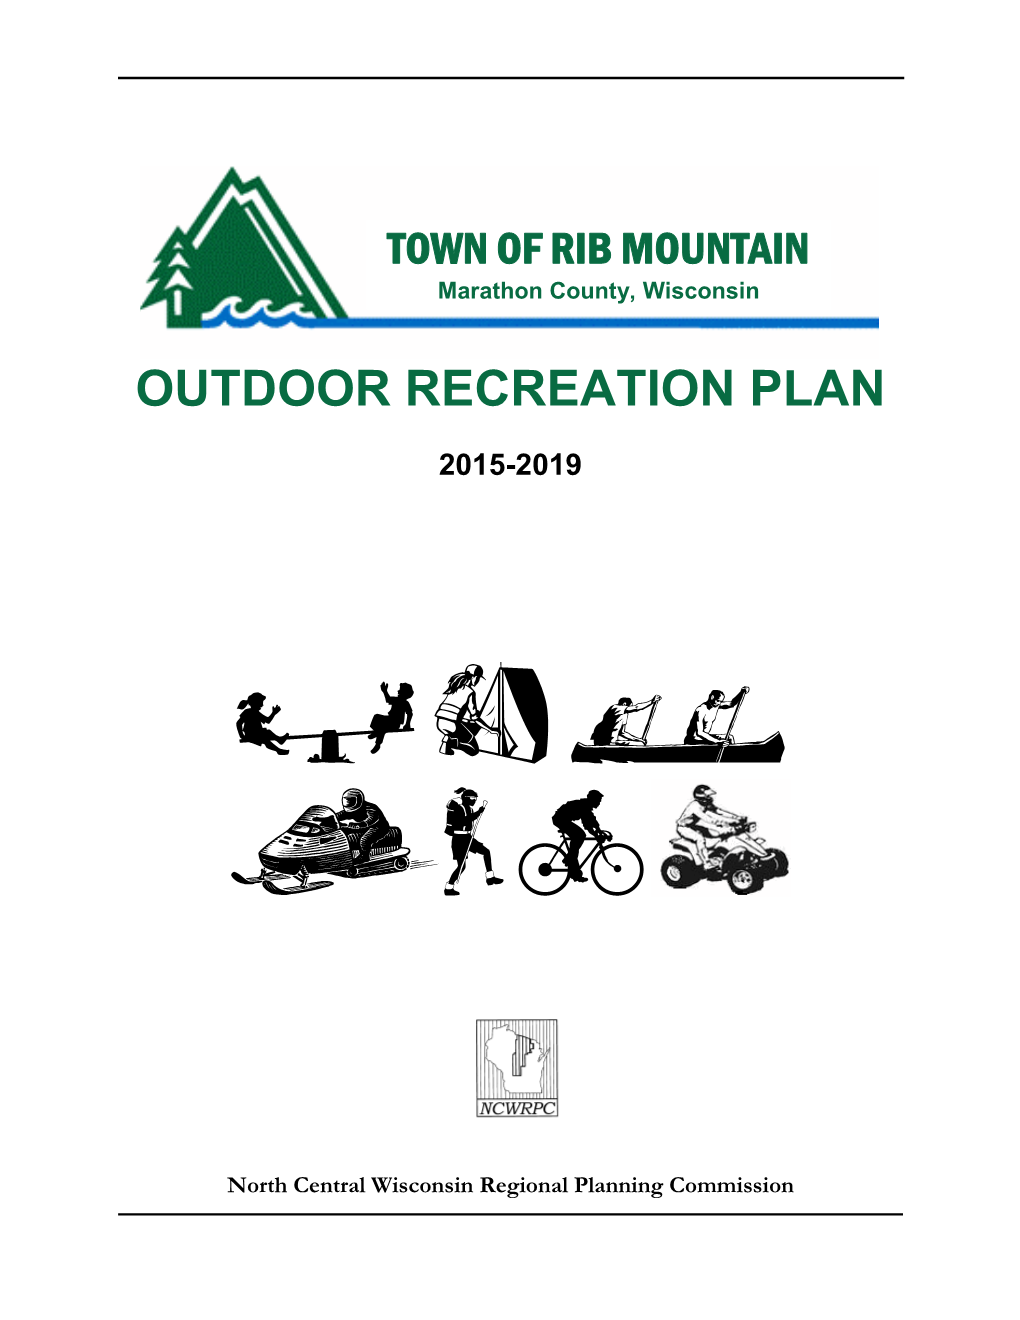 Town of Rib Mountain Outdoor Recreation Plan, 2015-2019